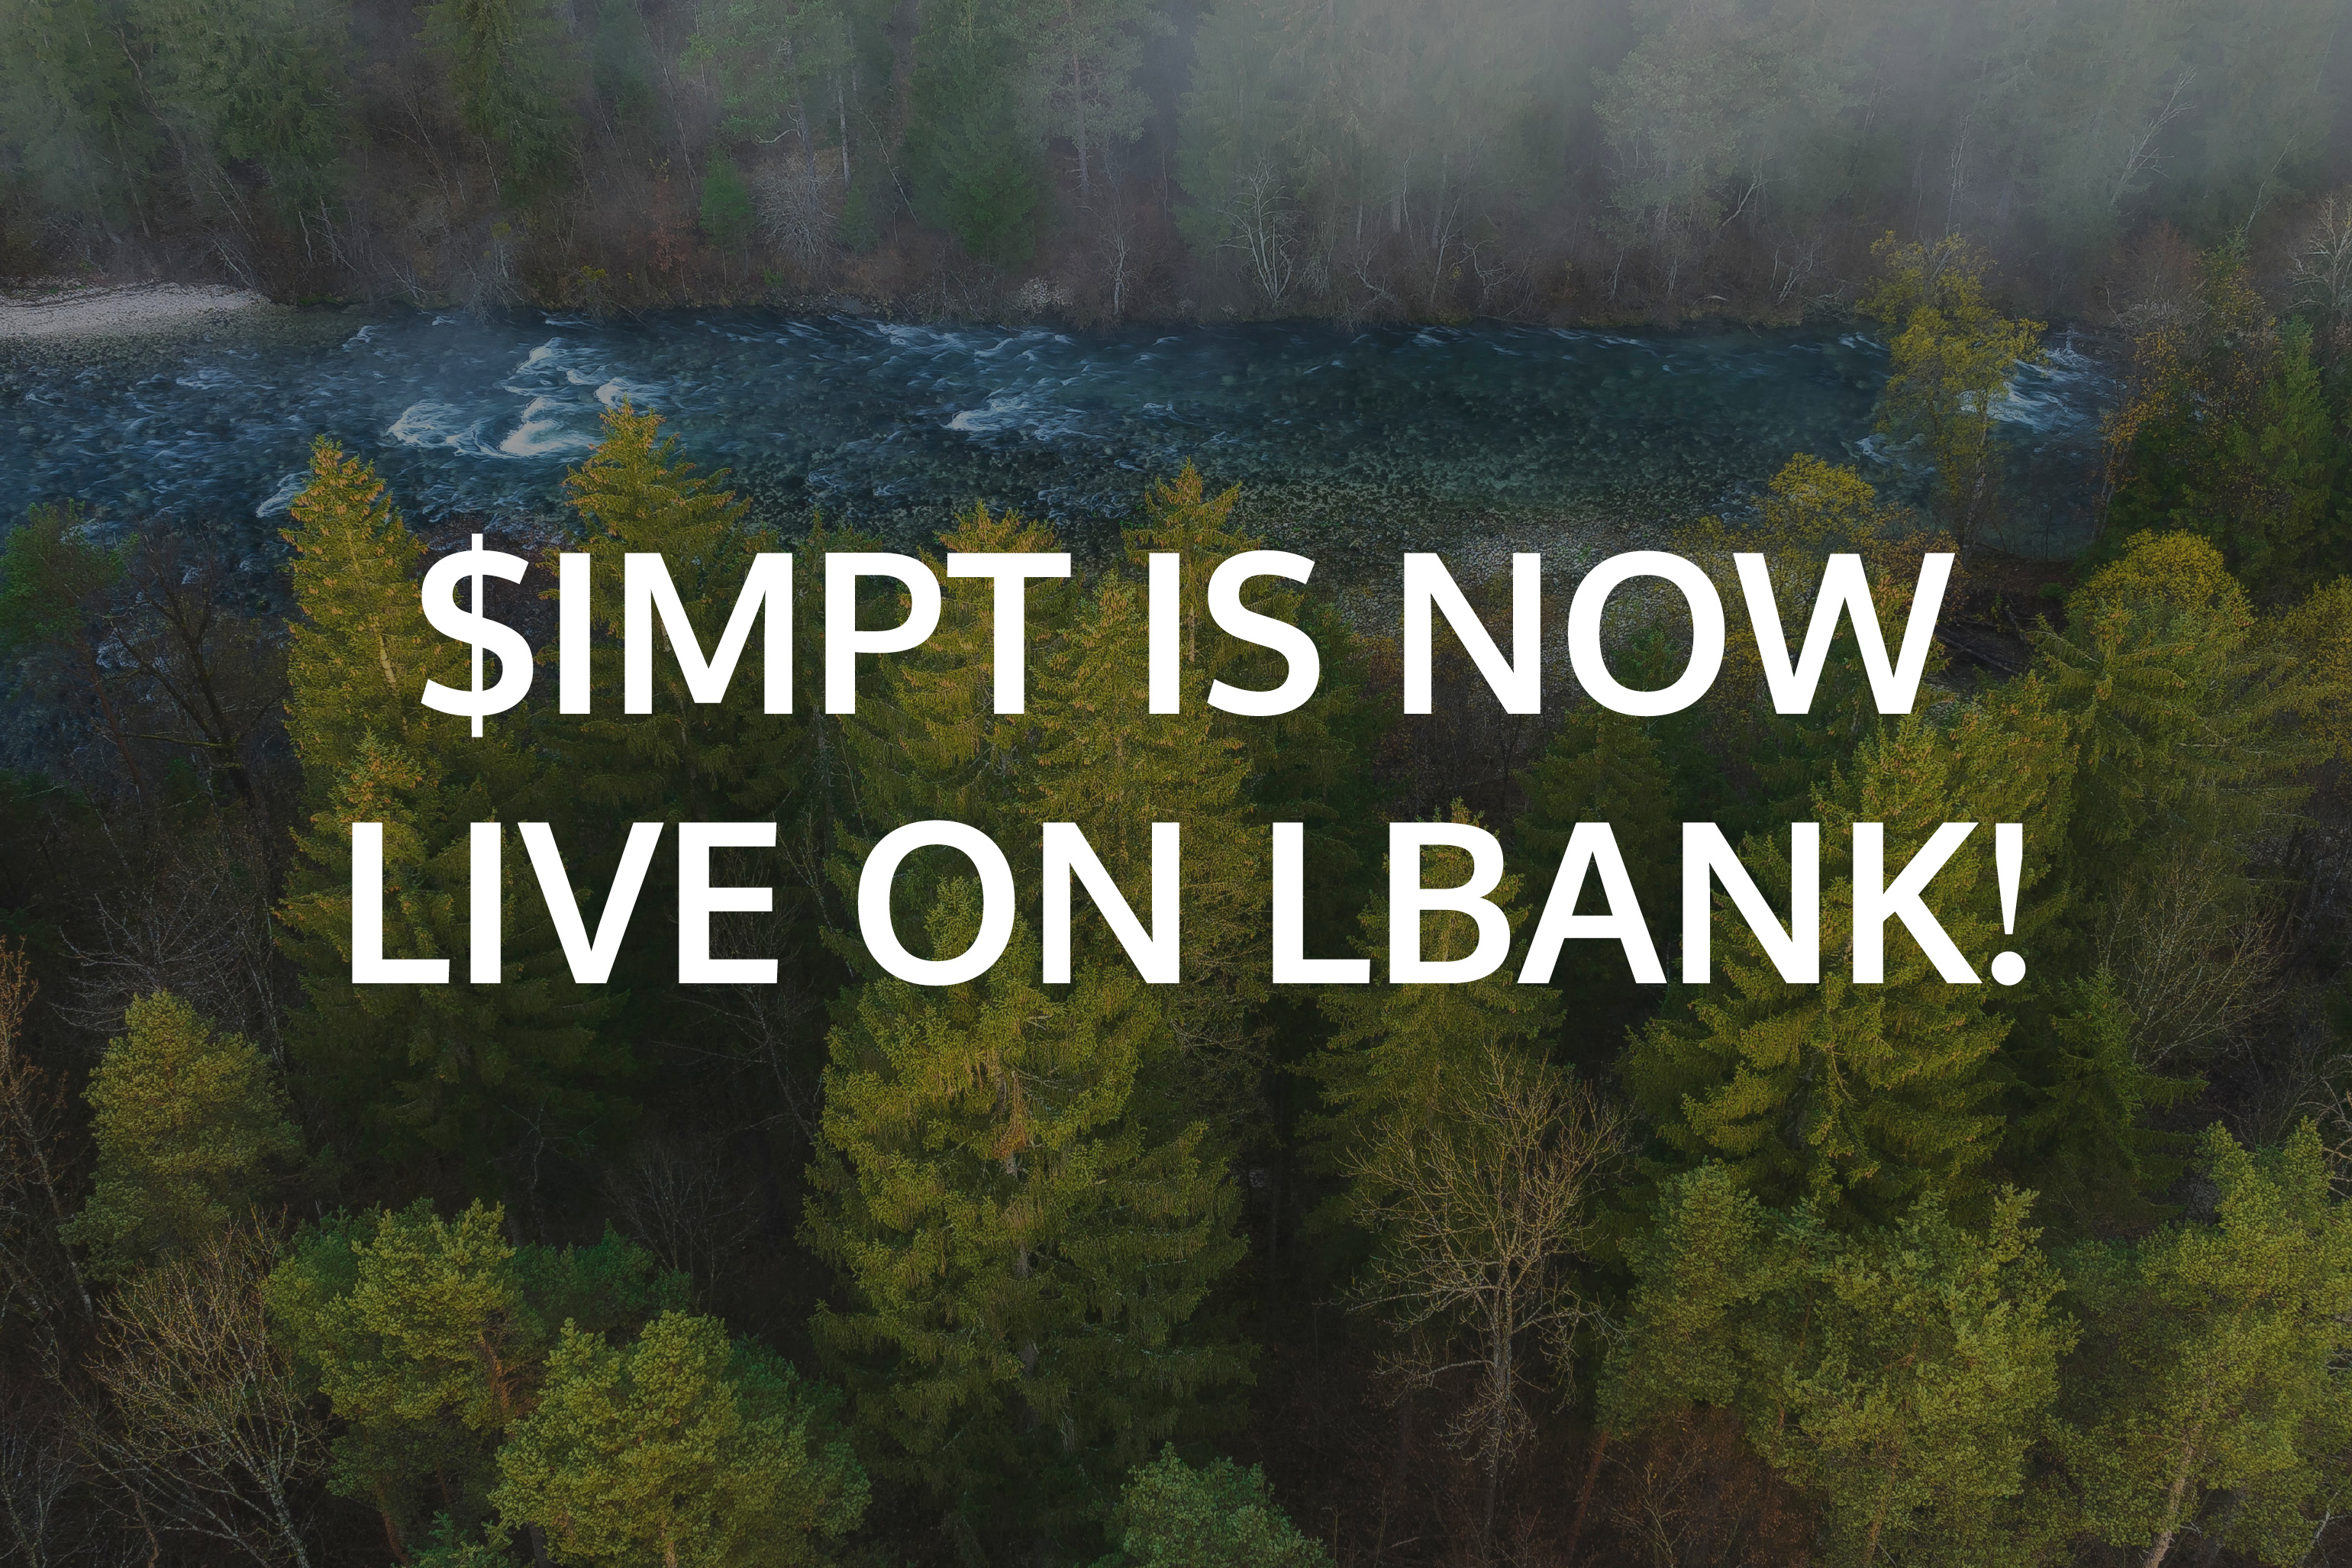 IMPT live op LBank